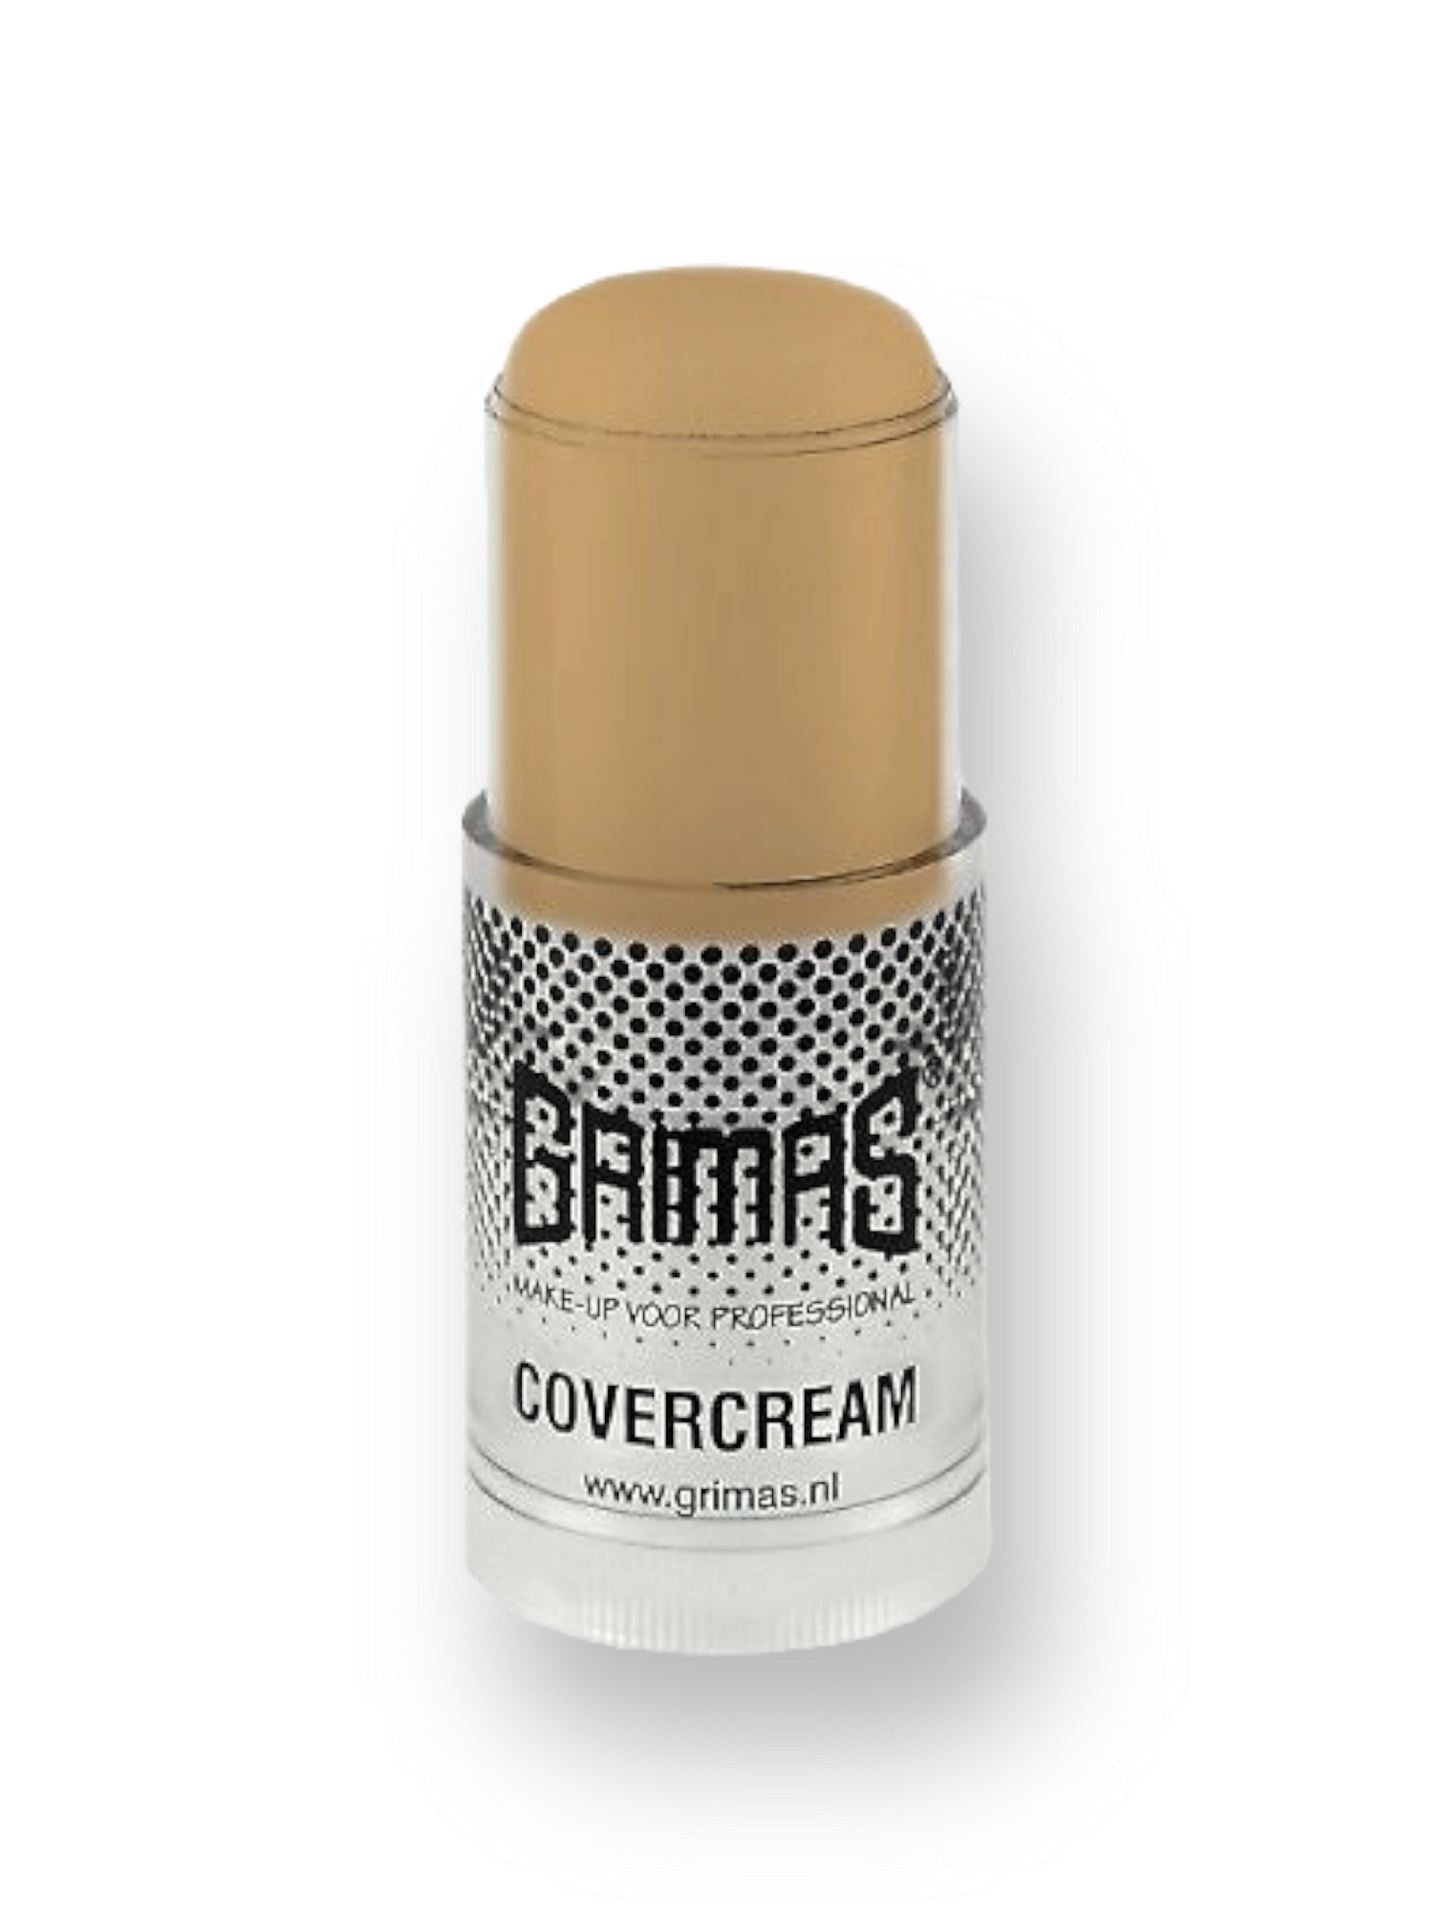 GRIMAS Cover Cream meikkivoidepuikko G4